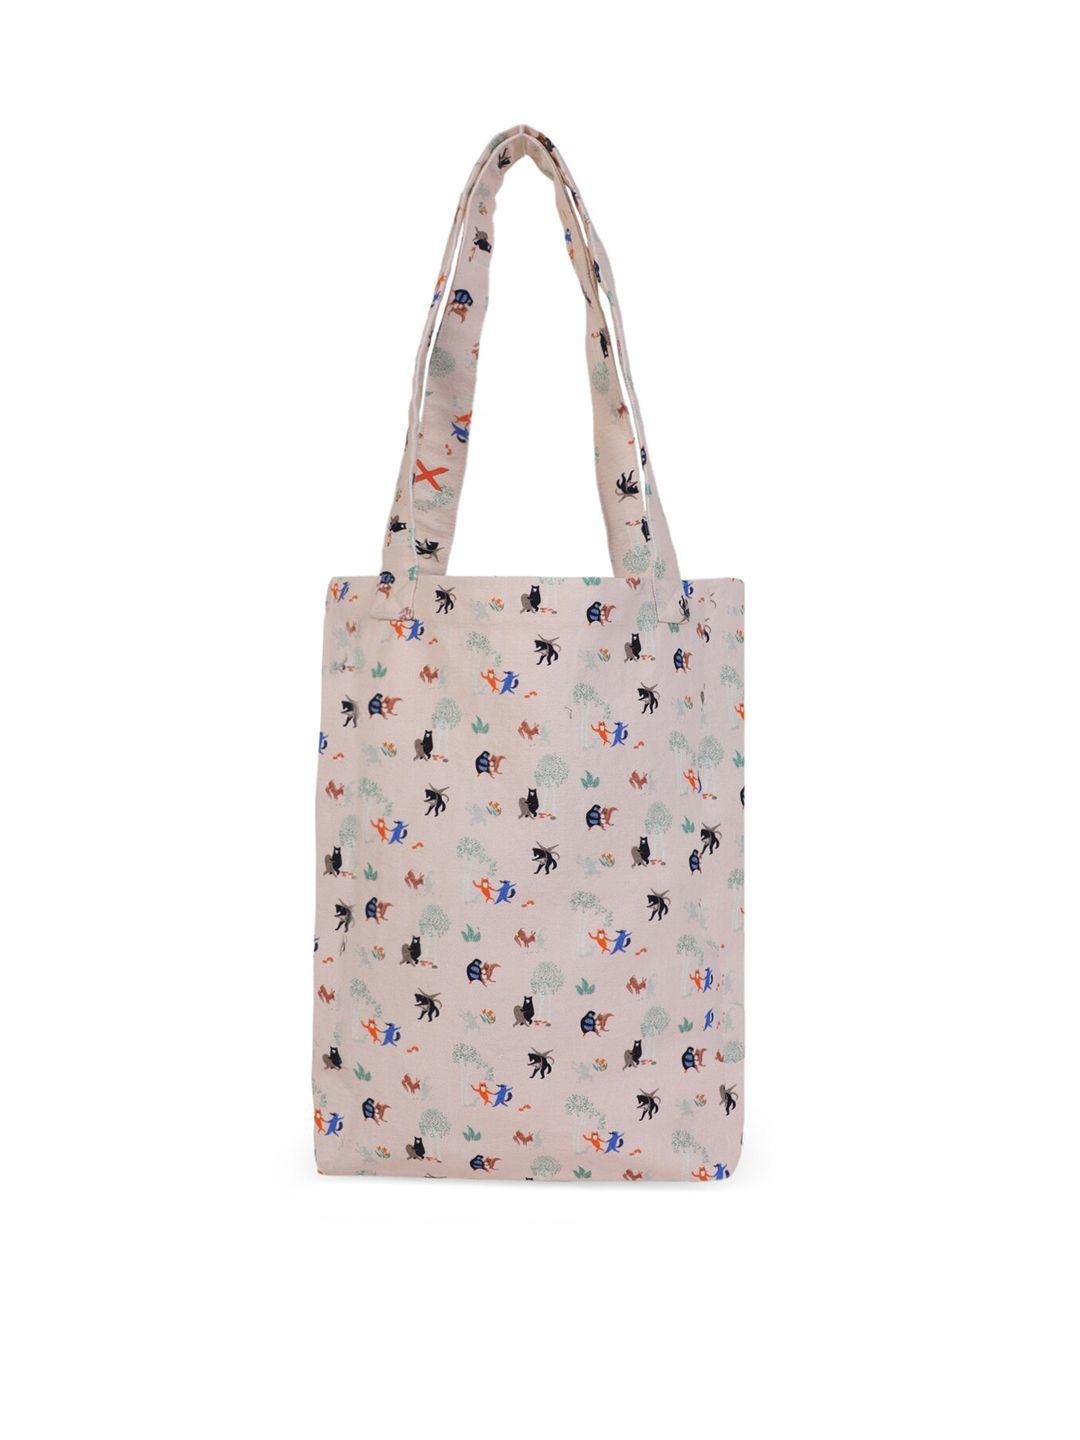 rediscover fashion printed shopper tote bag